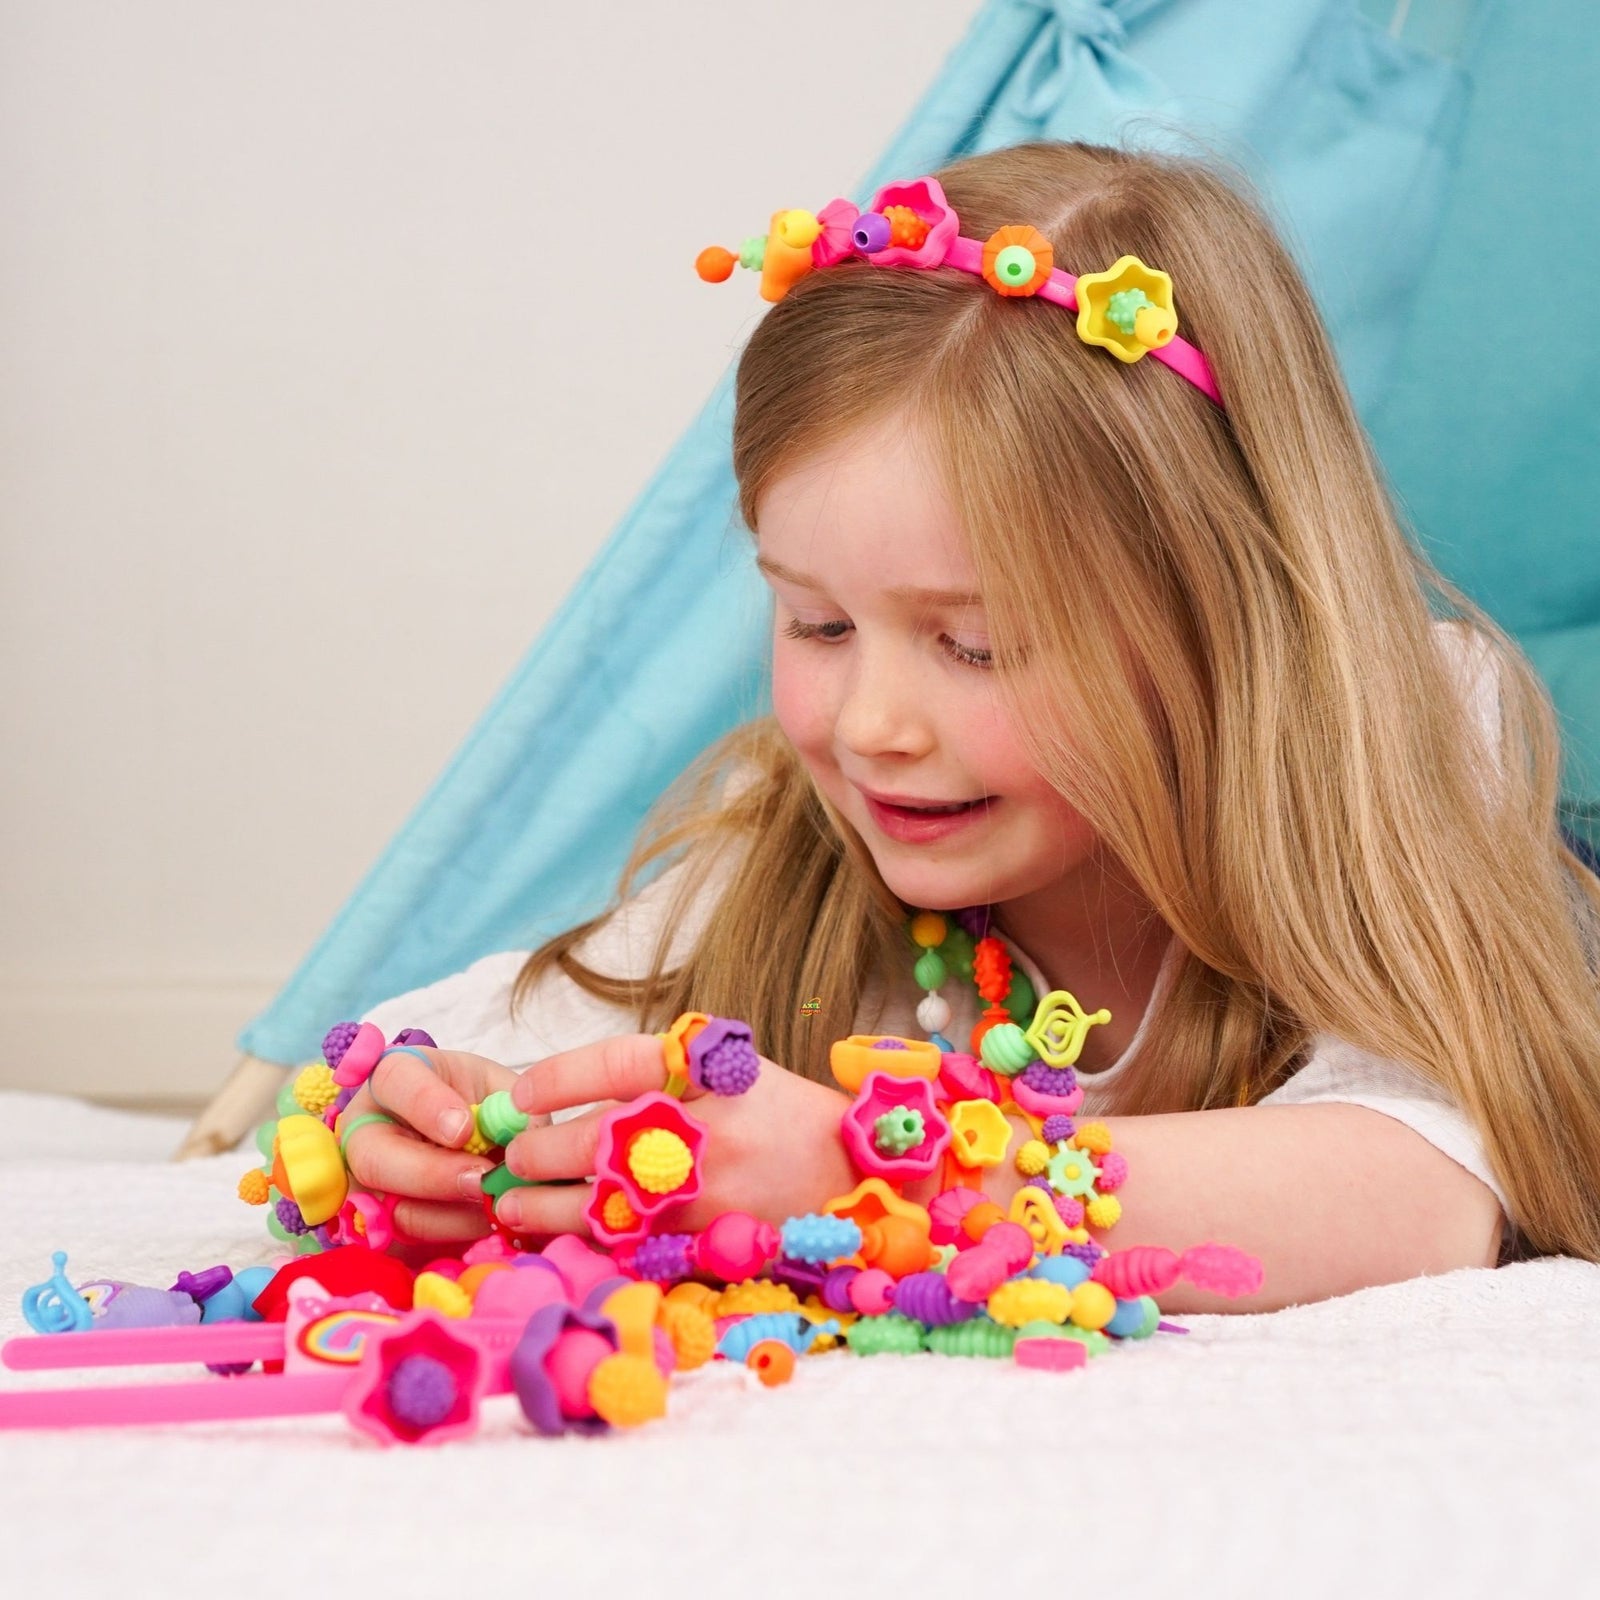 Hanmun Girls Toy Pop Snap Beads - Jewelry Marking Kit for Girls 5-7, 119 Pieces DIY Necklace Ring Bracelet Art Toddler Crafts, Ideal Christmas